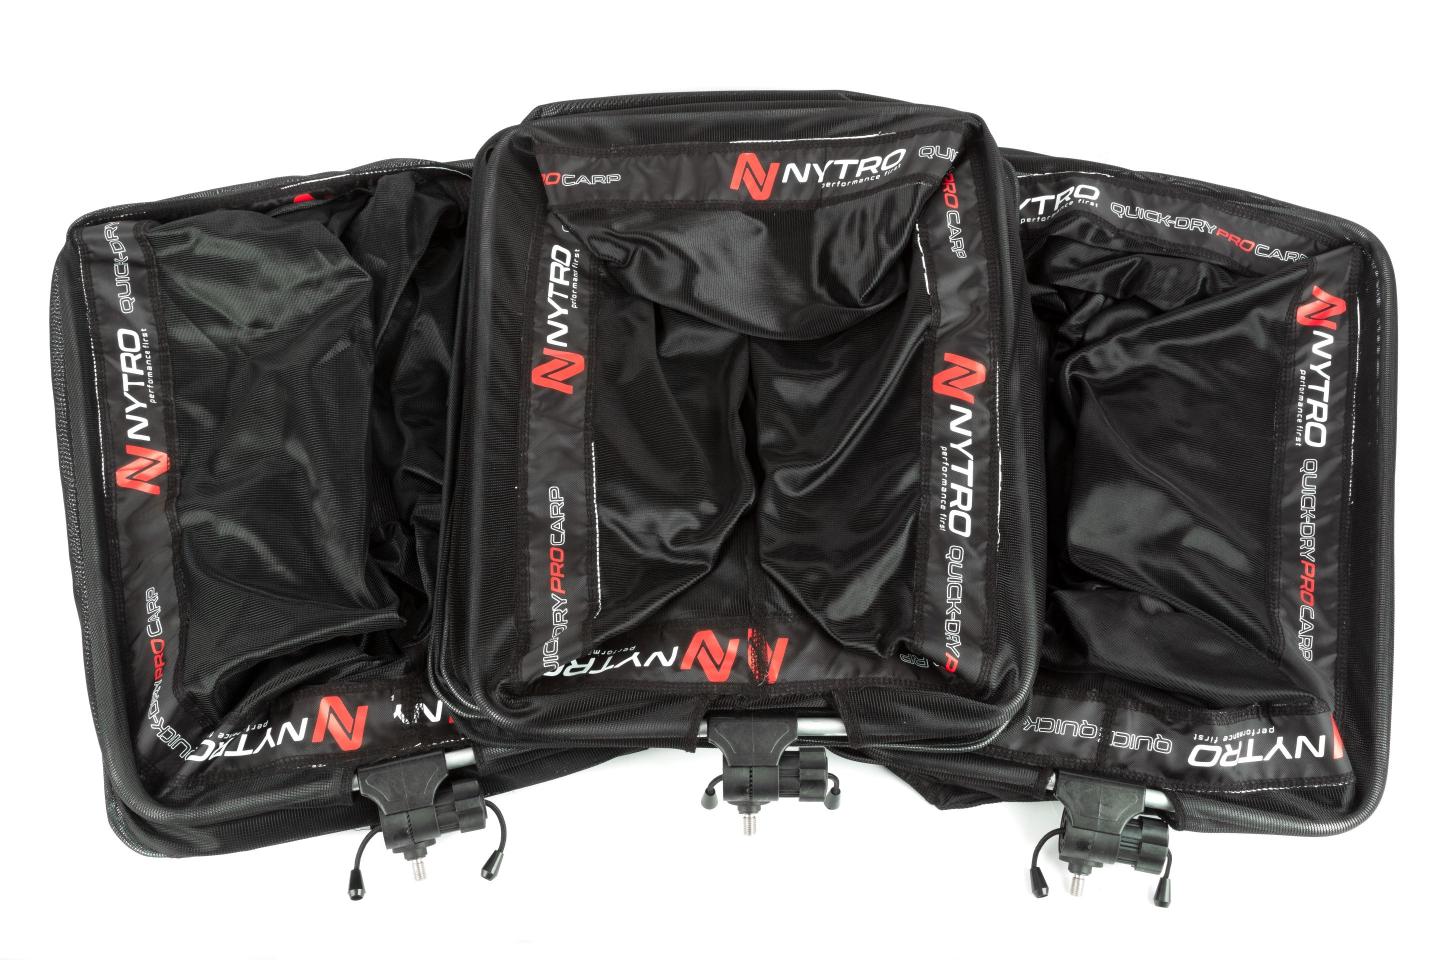 Nytro Commercial Carp 2500 Value Pack (3 Nasse)